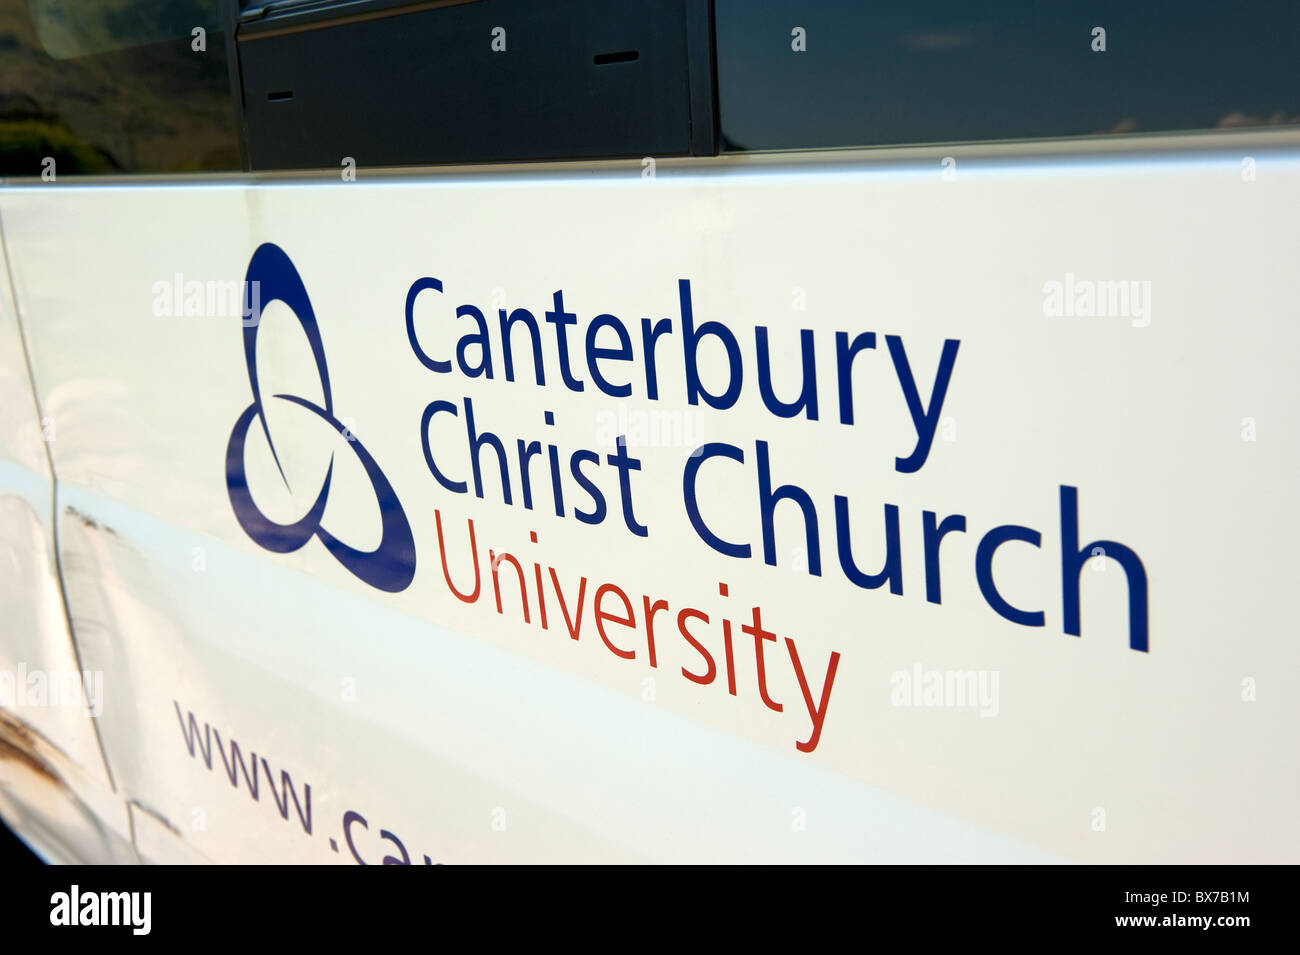 Canterbury Christ Church University sign on Minibus Stock Photo